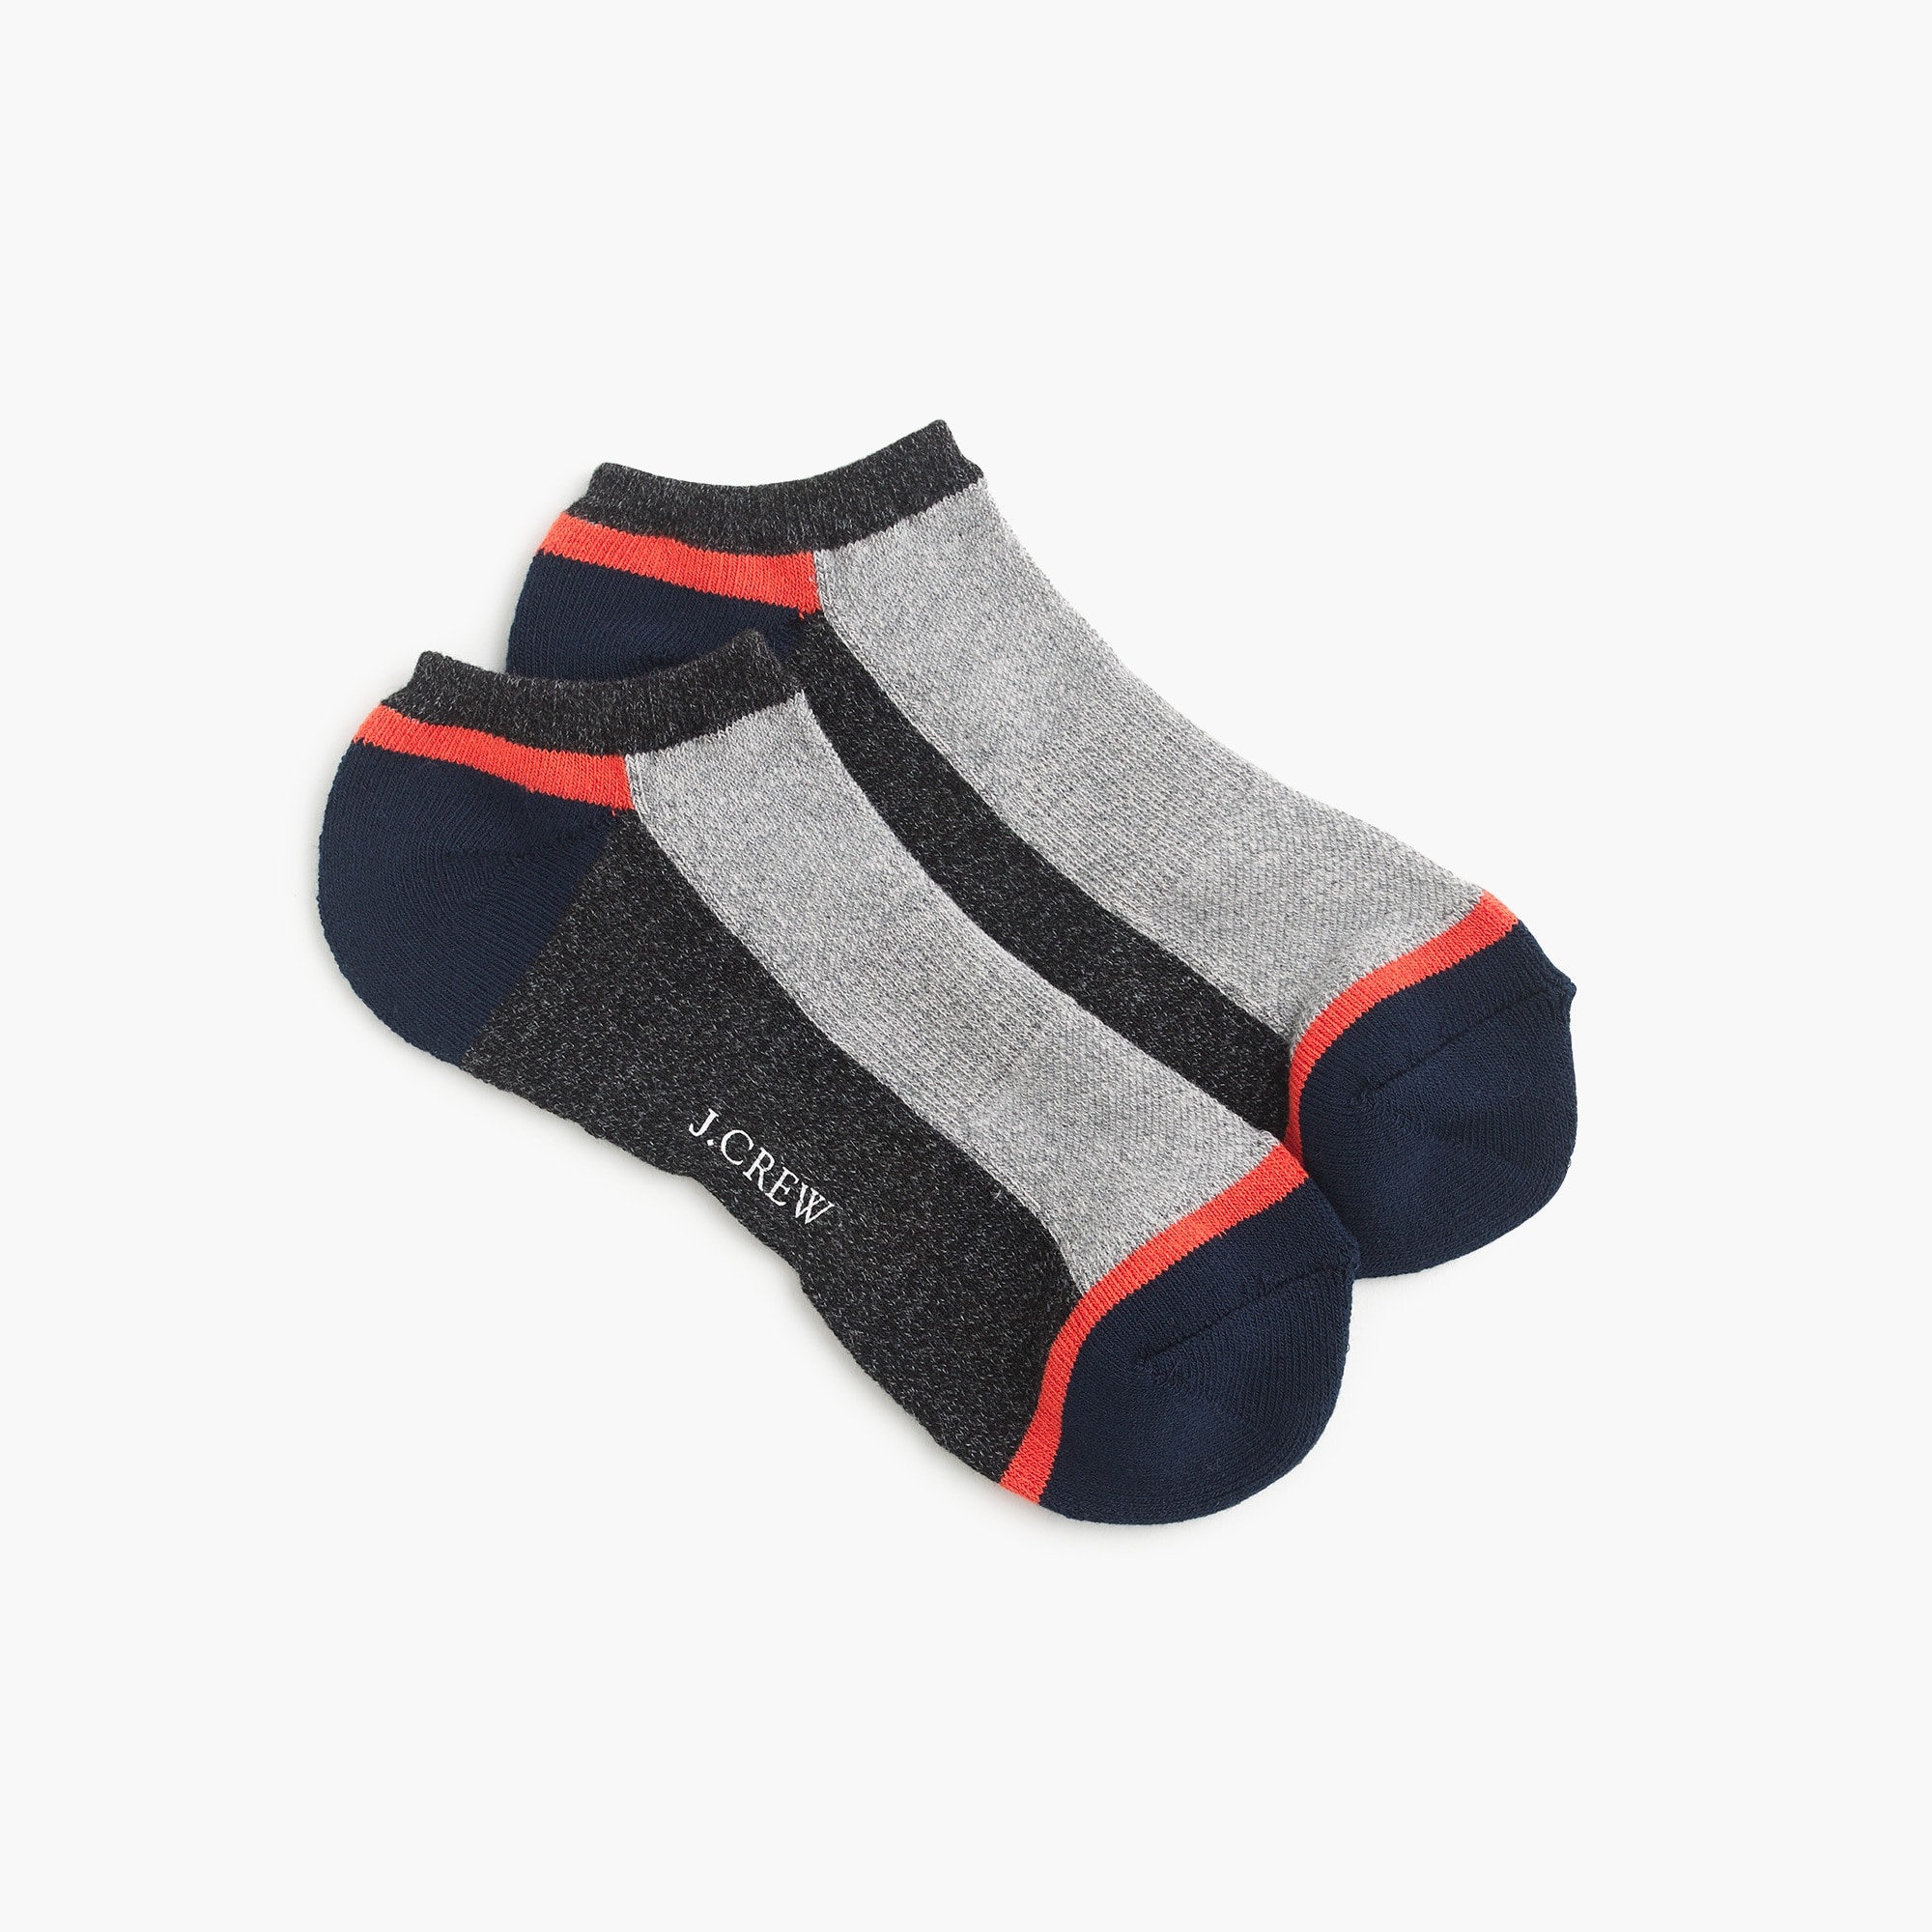 Performance athletic ankle socks : Men socks | J.Crew